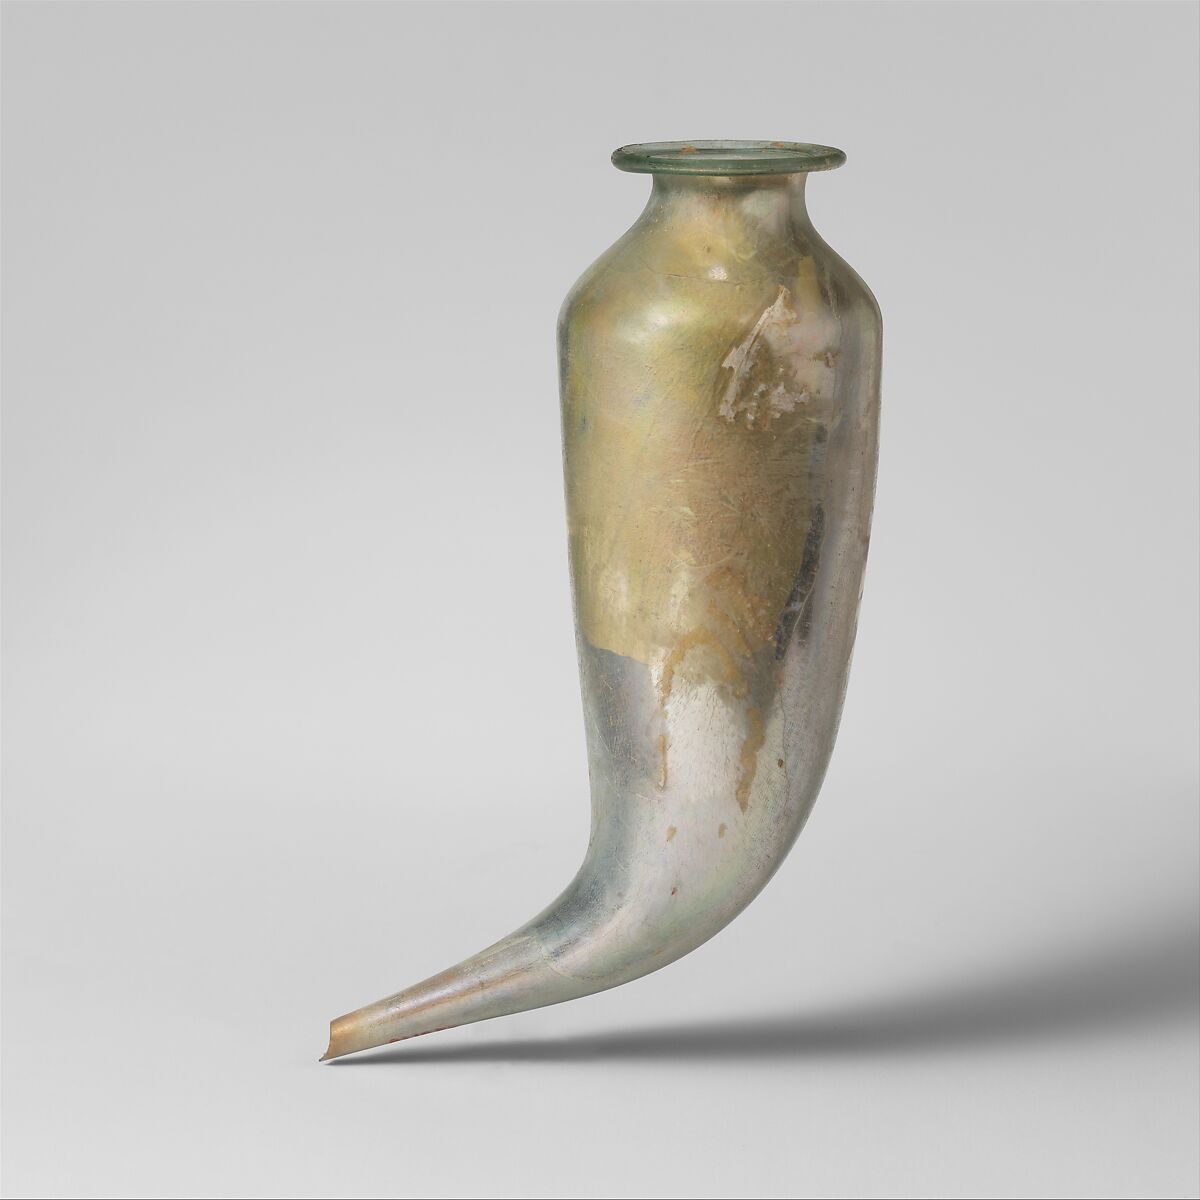 Glass rhyton (drinking horn), Glass, Roman 